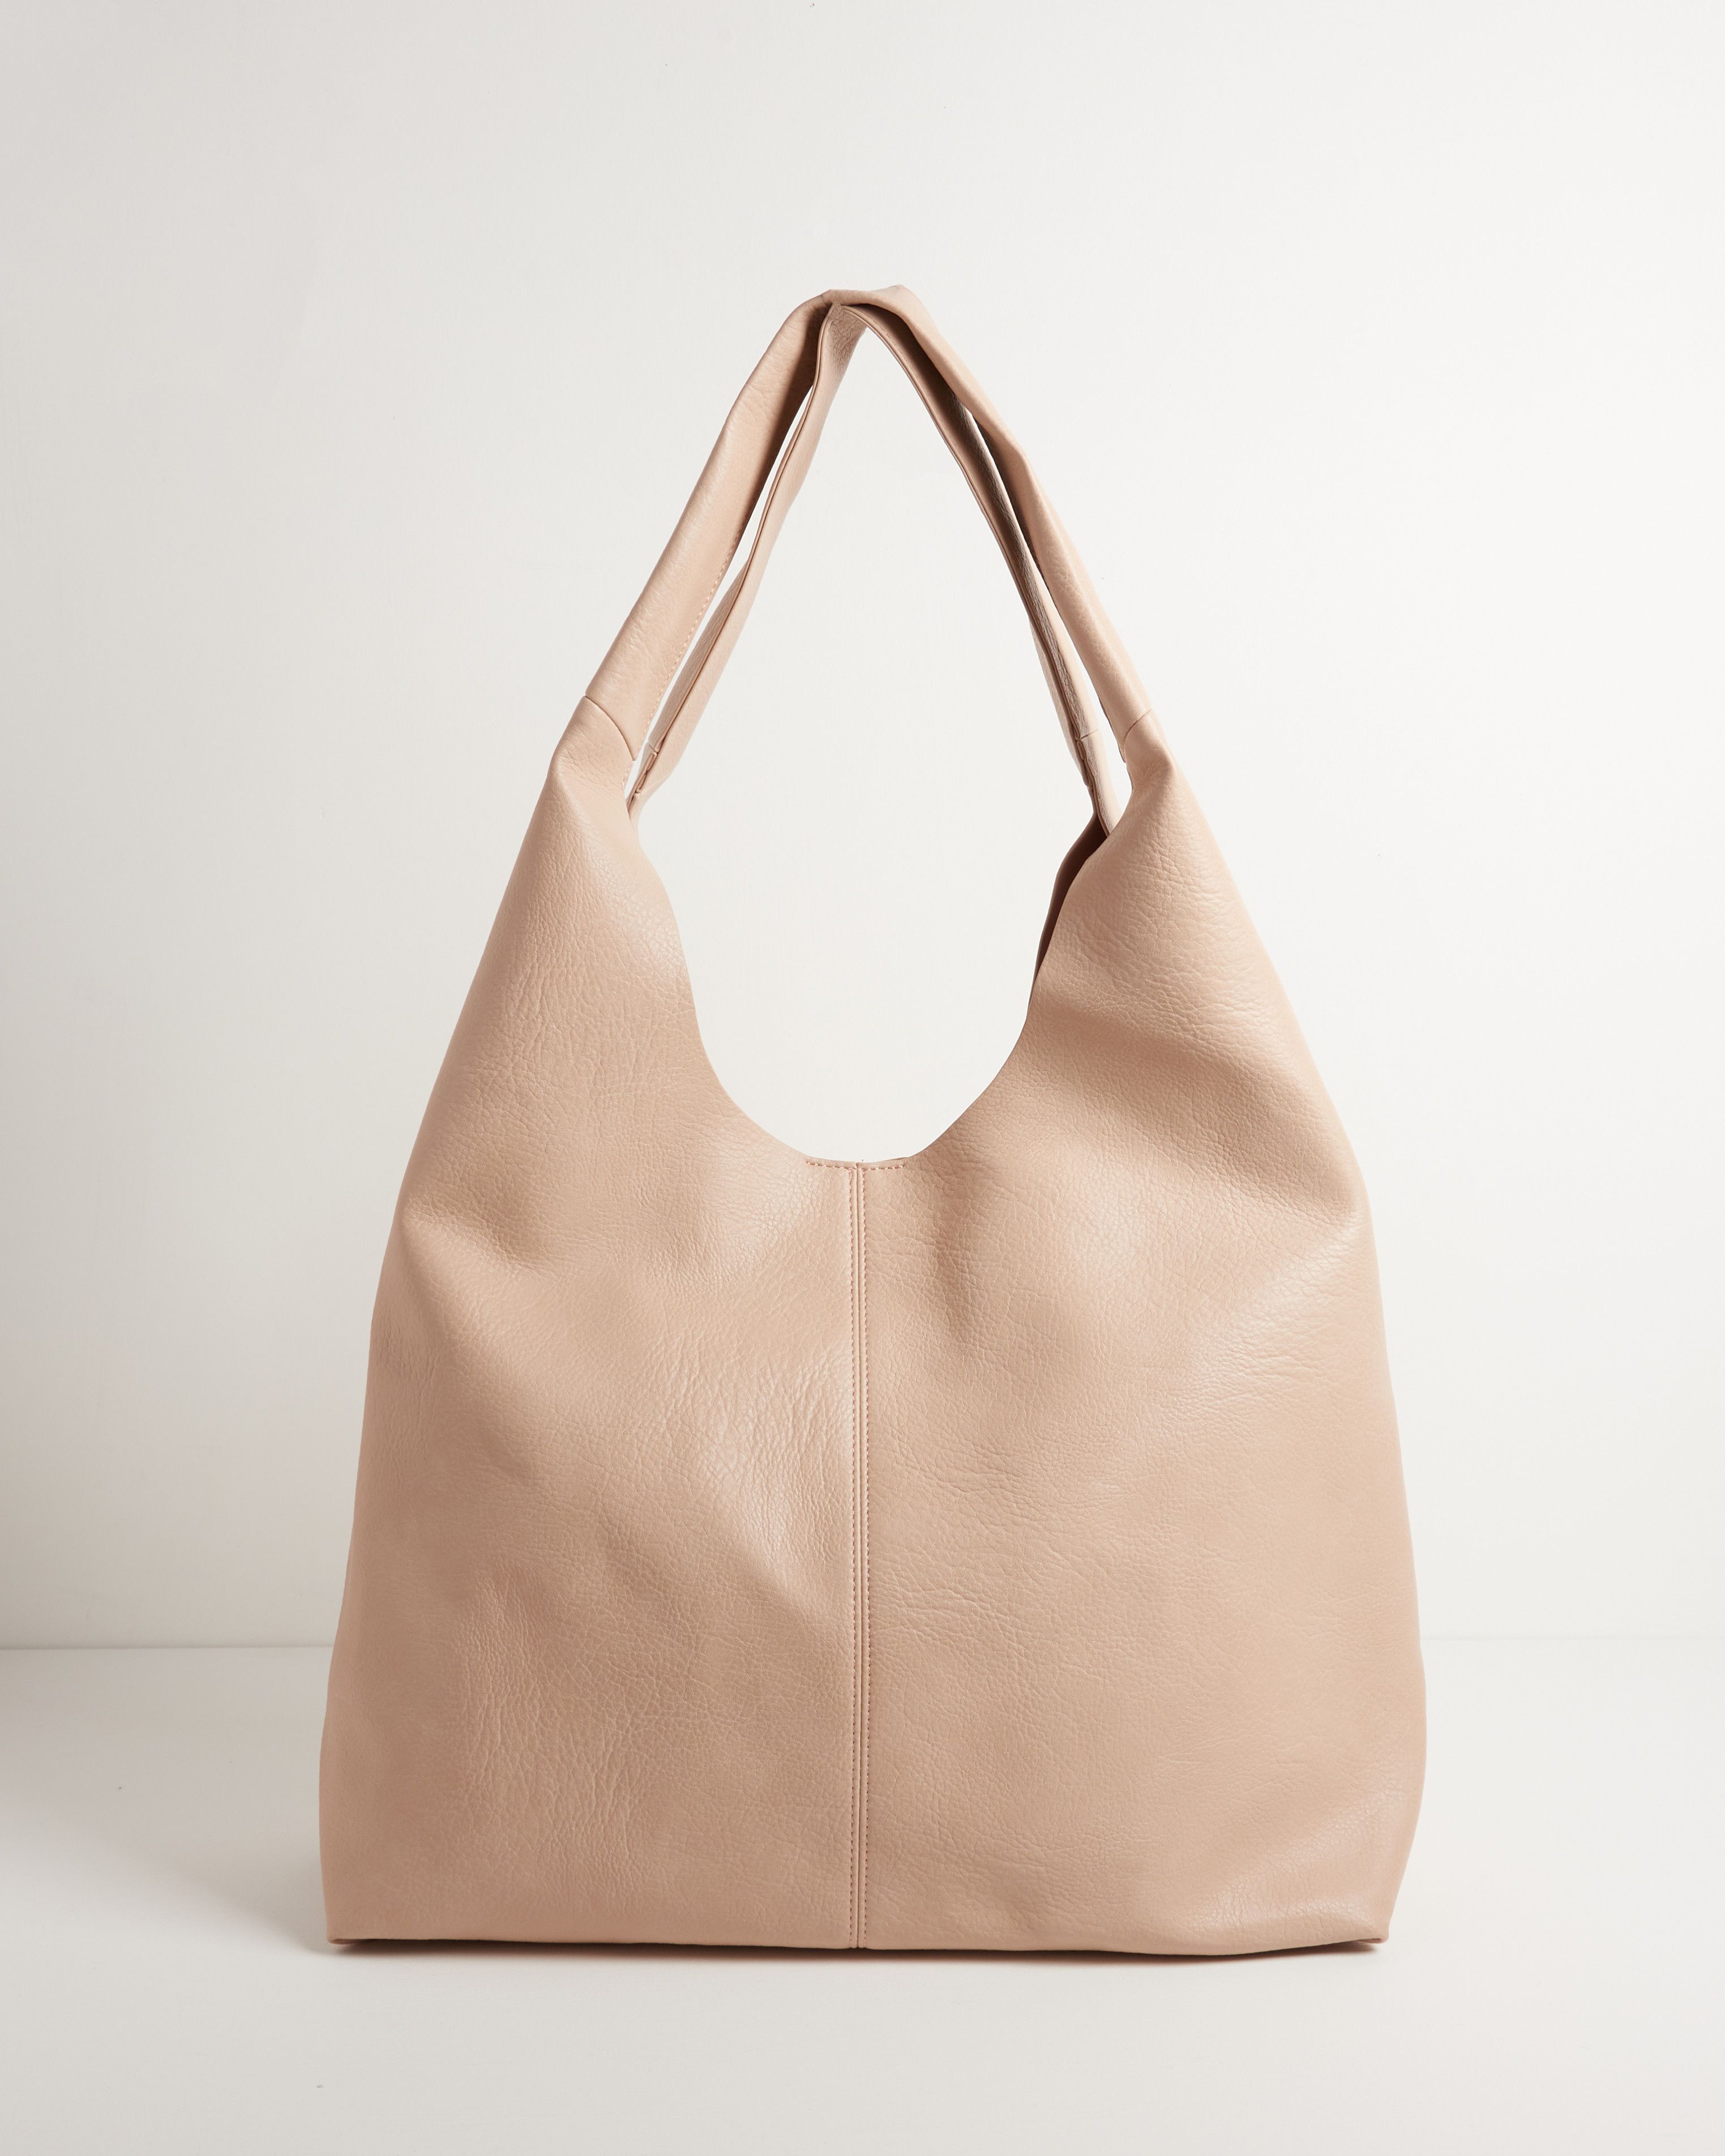 Brown Oversized Leather Tote Bag Shoulder Bag Slouchy Tote Handbag for  Women Weekender Soft Leather Bag Campus Bag - AliExpress